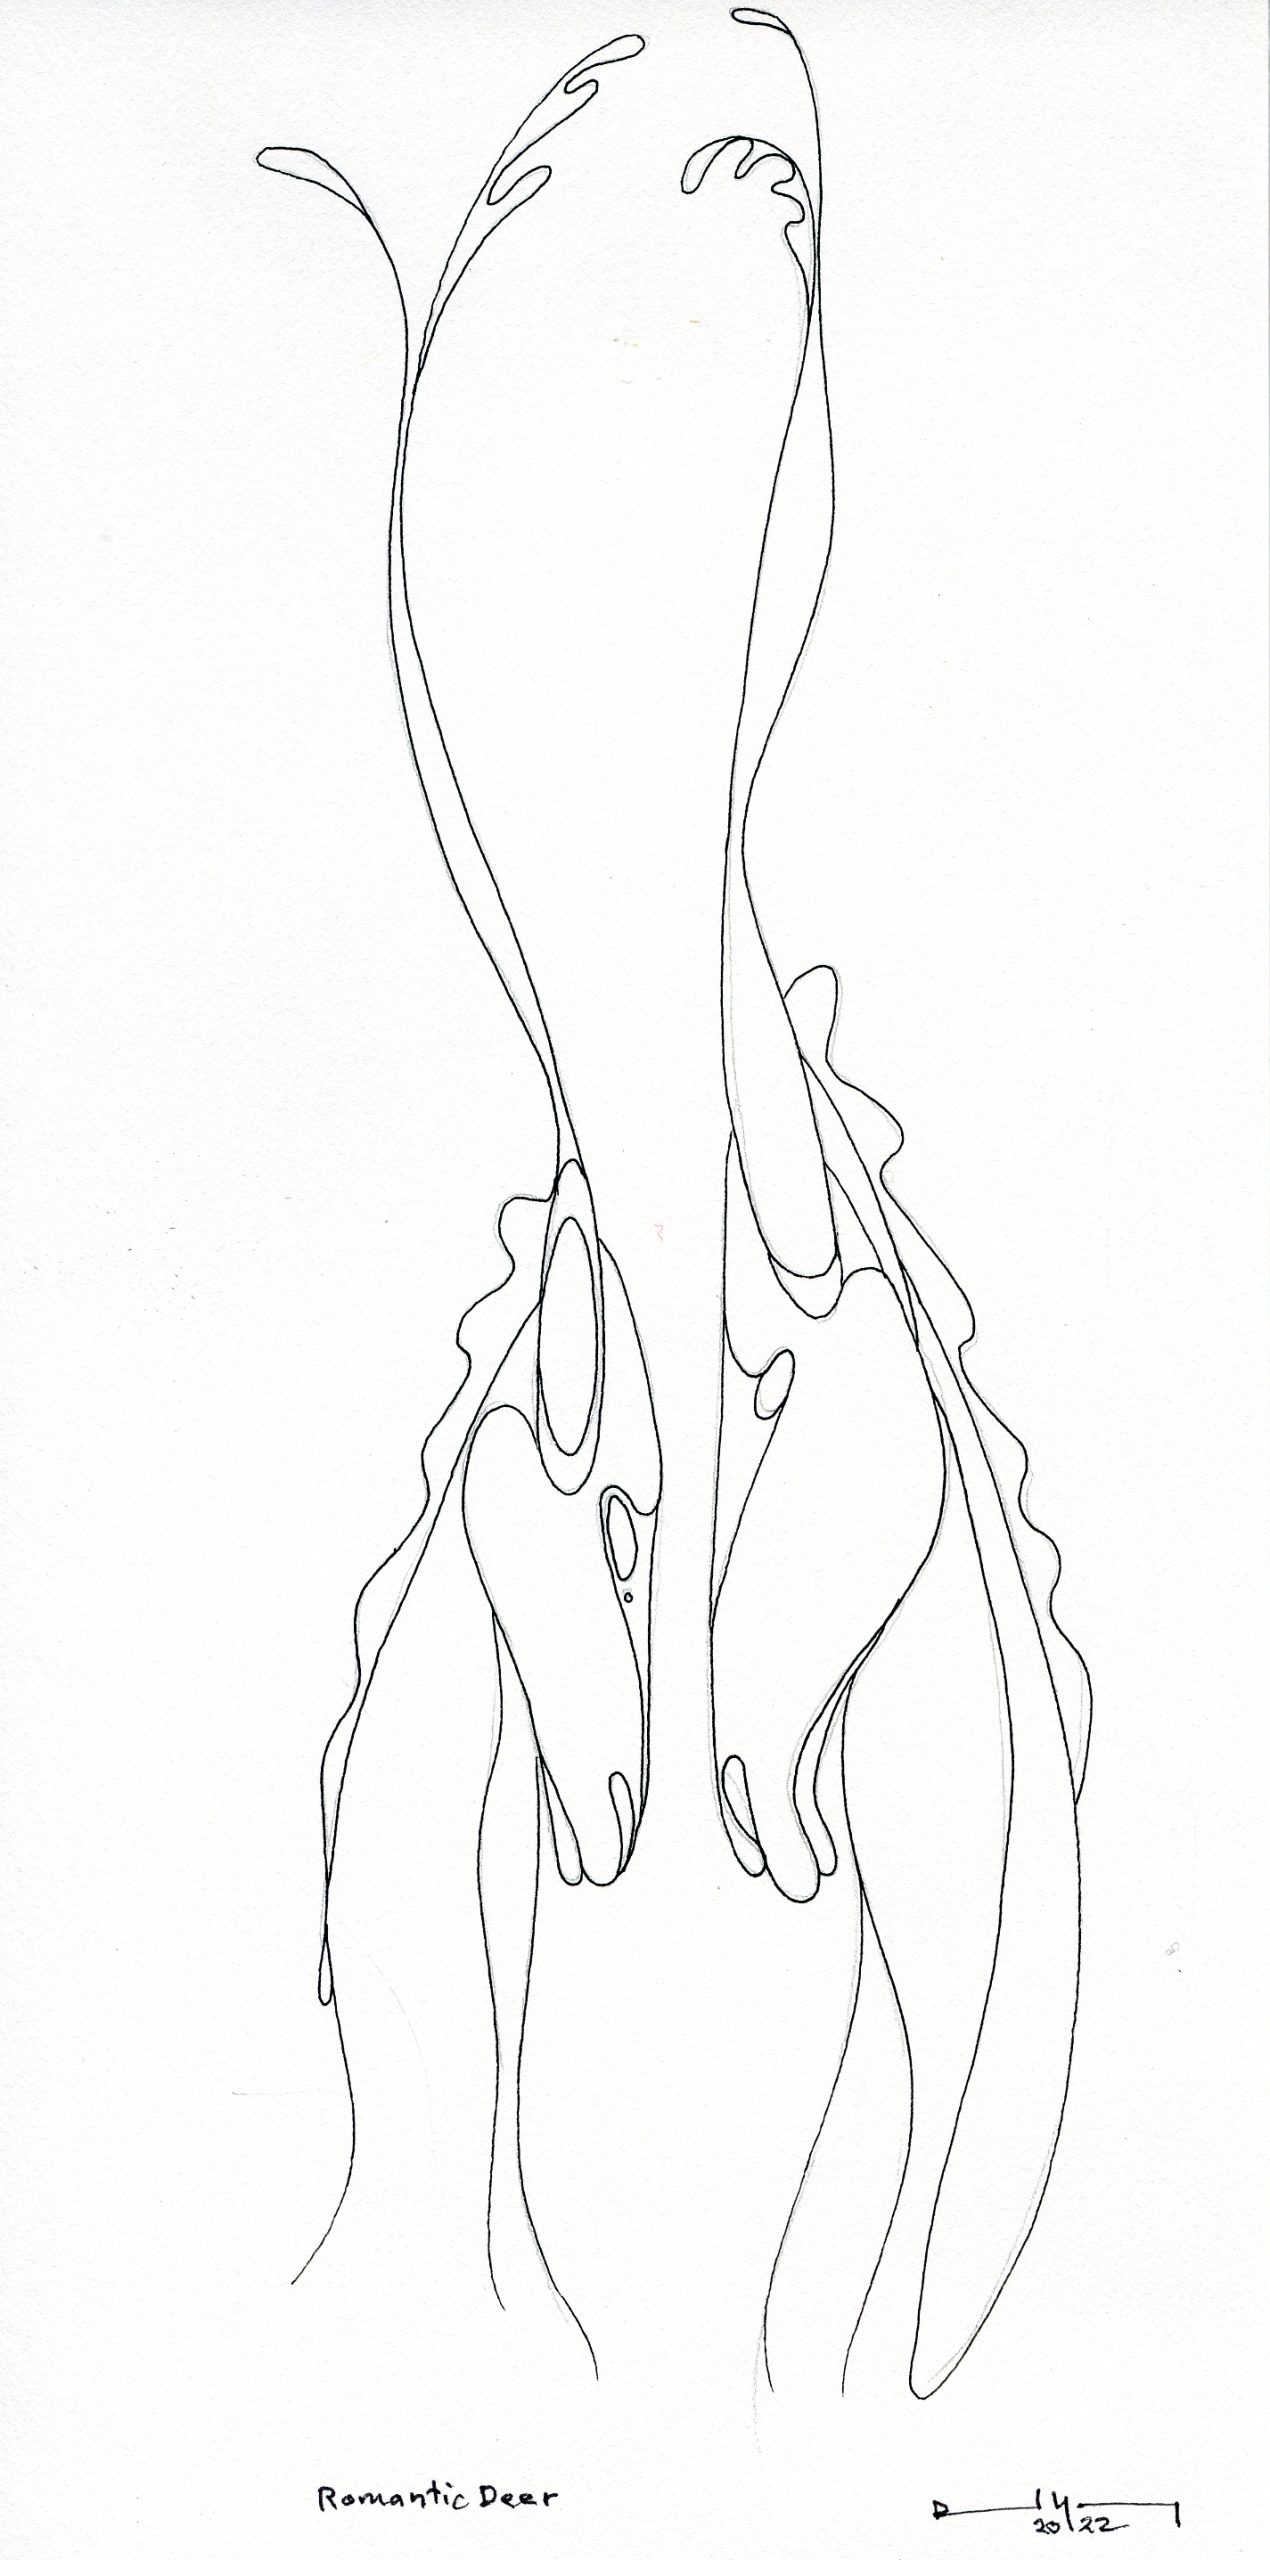 Romantic Deer.Pen & Ink Drawing.2022.�395.